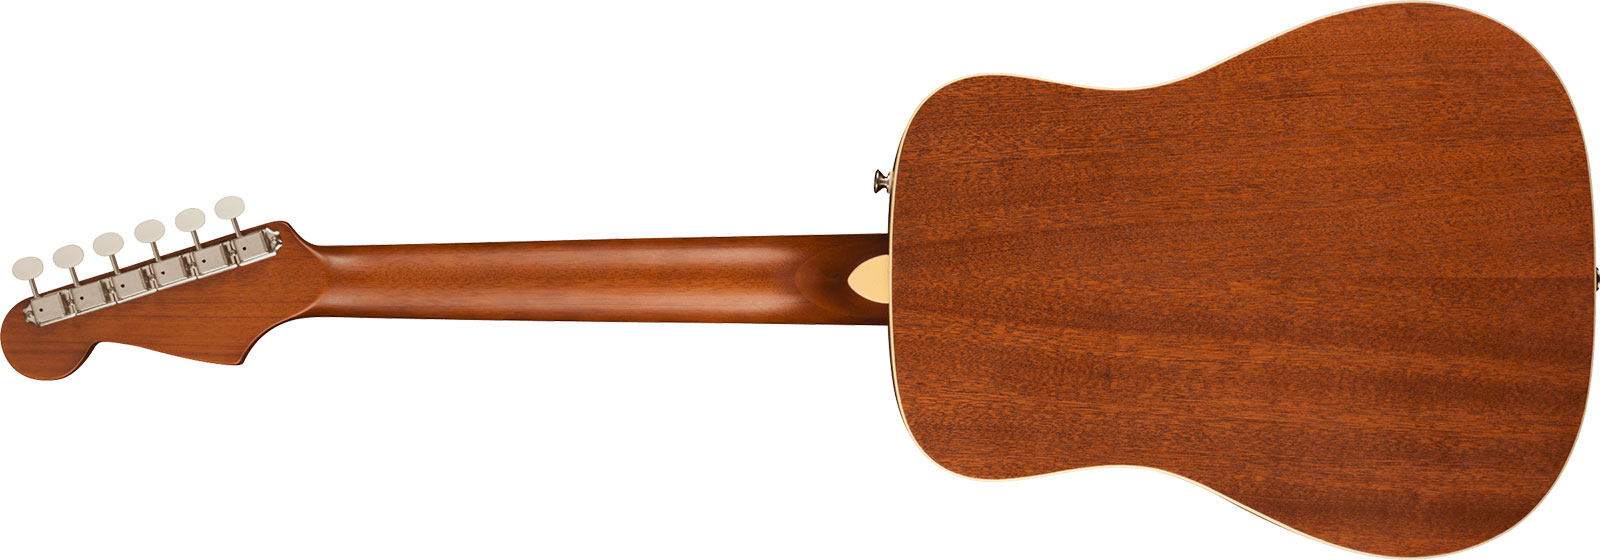 Fender Redondo Mini All Mahogany California Ltd Dreadnought 1/2 Tout Acajou Noy - Natural Satin - Western-Reisegitarre - Variation 1